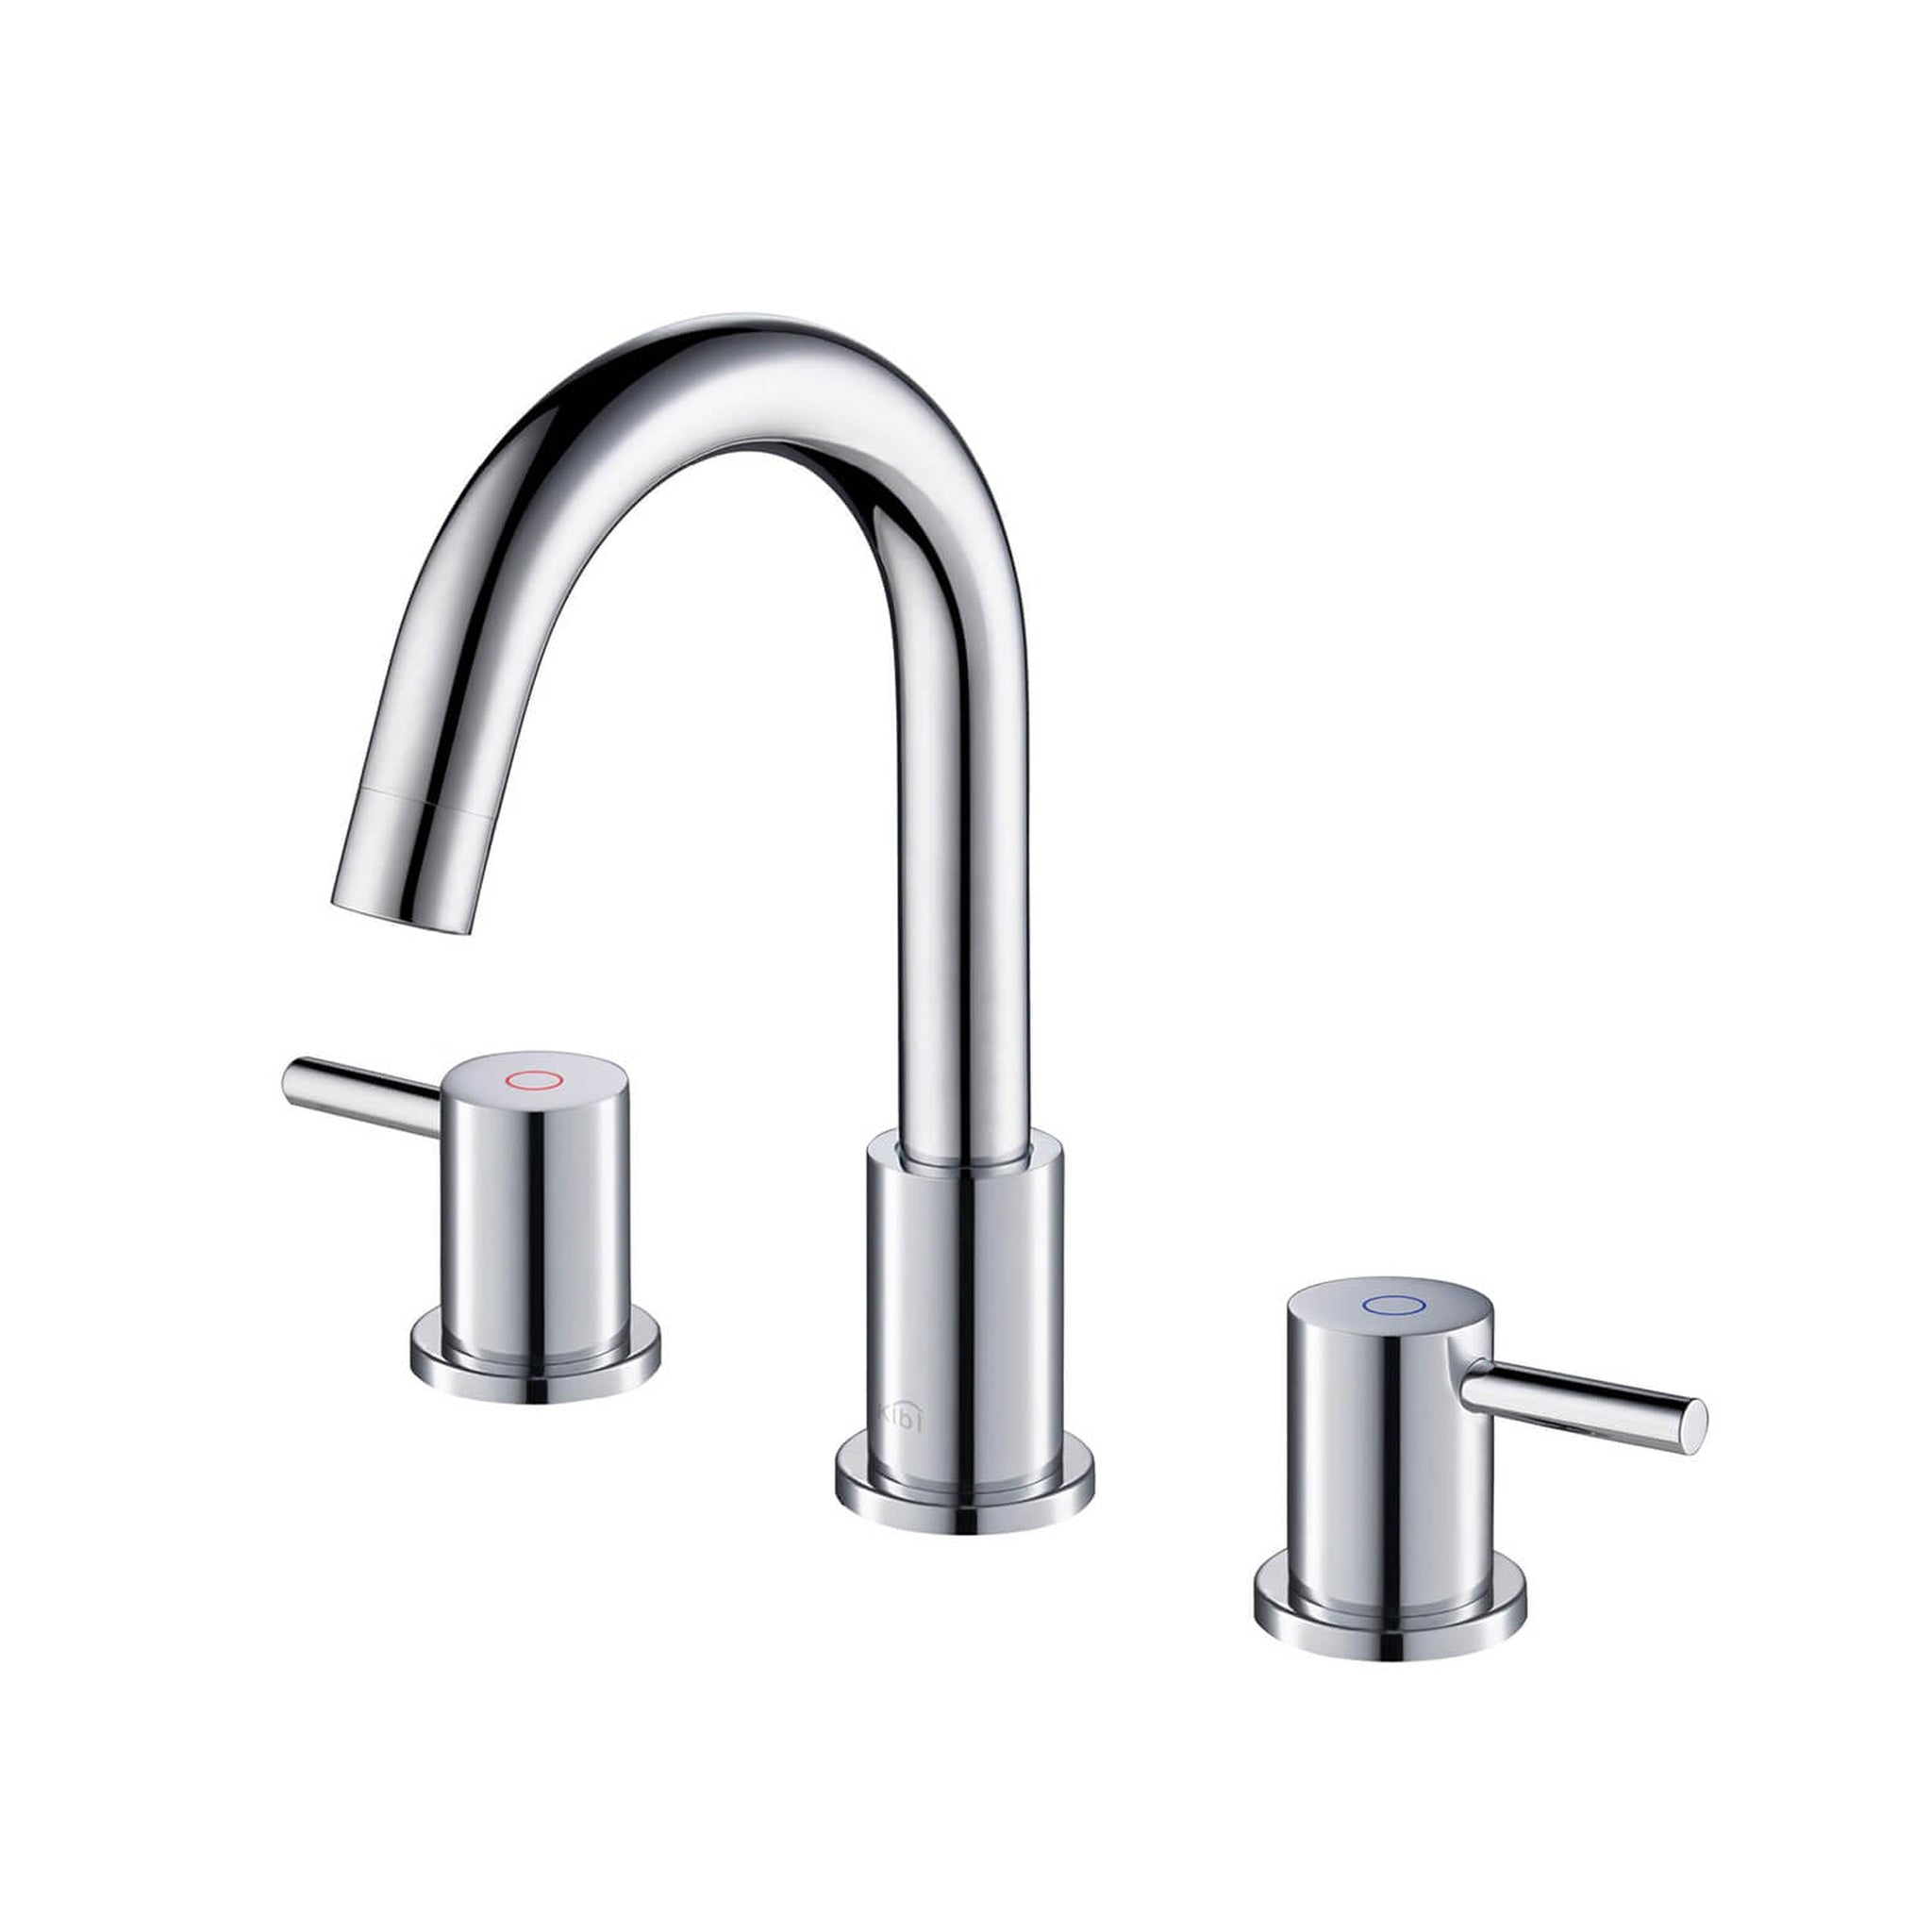 KIBI, KIBI Circular 8" Widespread 2-Handle Chrome Solid Brass Bathroom Sink Faucet With Pop-Up Drain